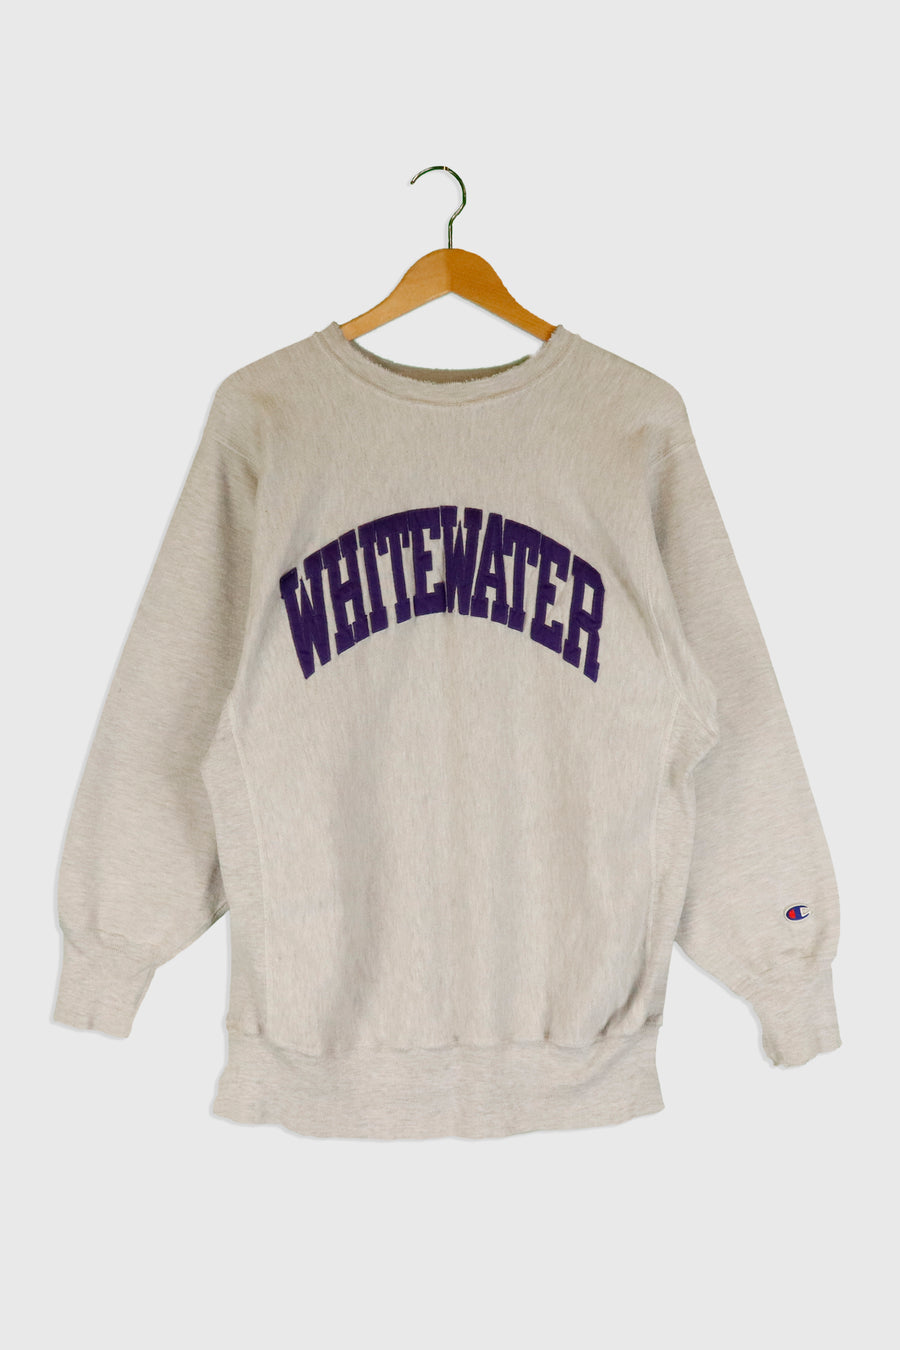 Vintage White Water Patch Lettering Sweatshirt